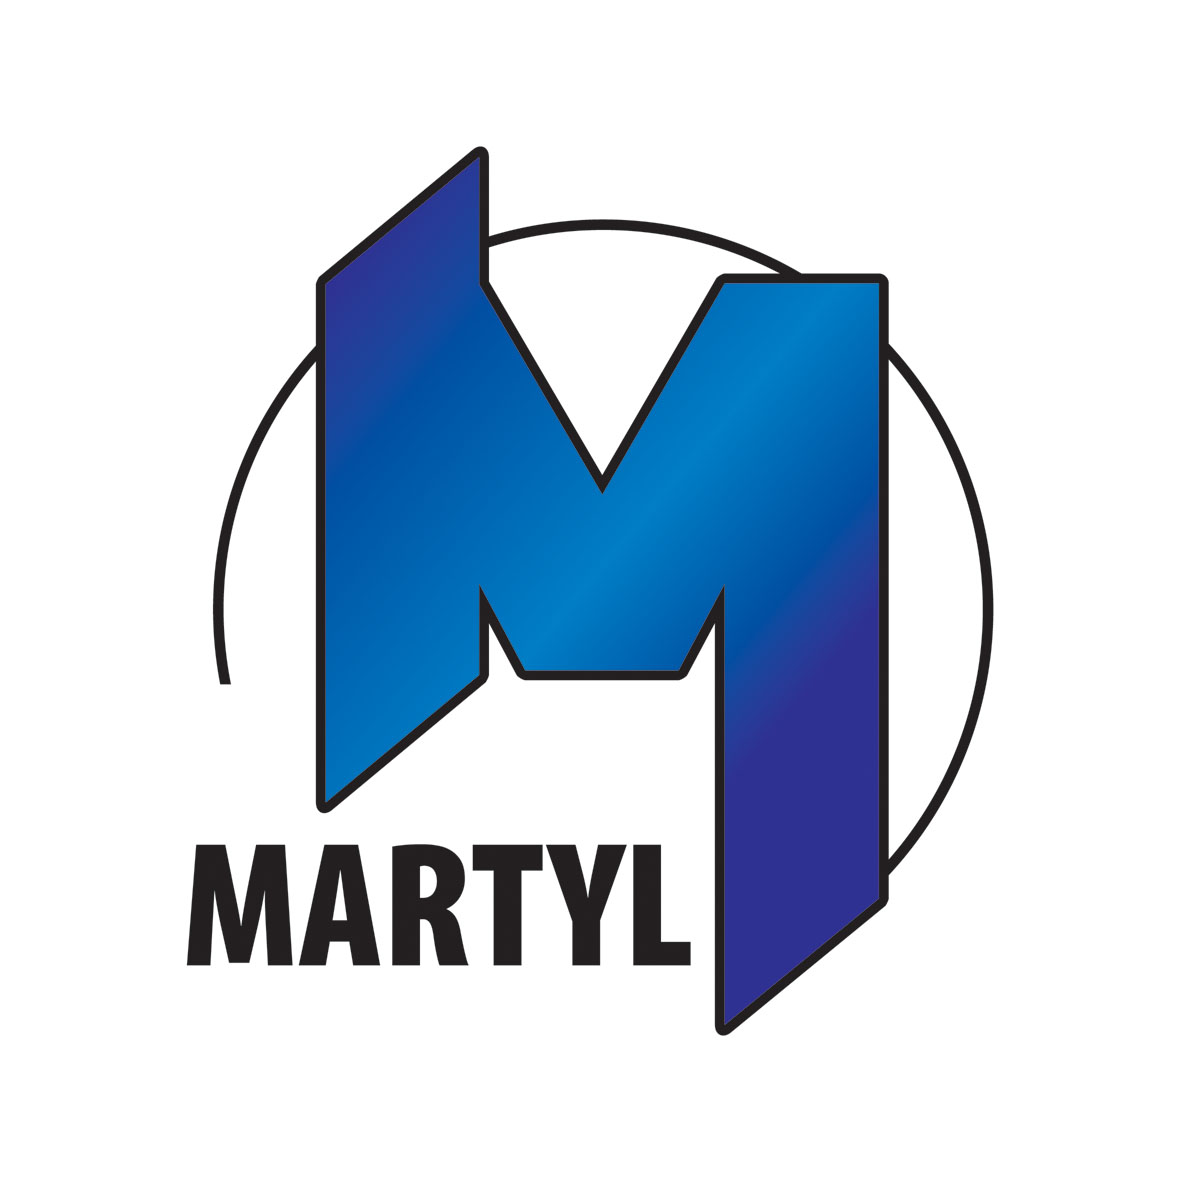 martyl logotype 150 dpi RGB